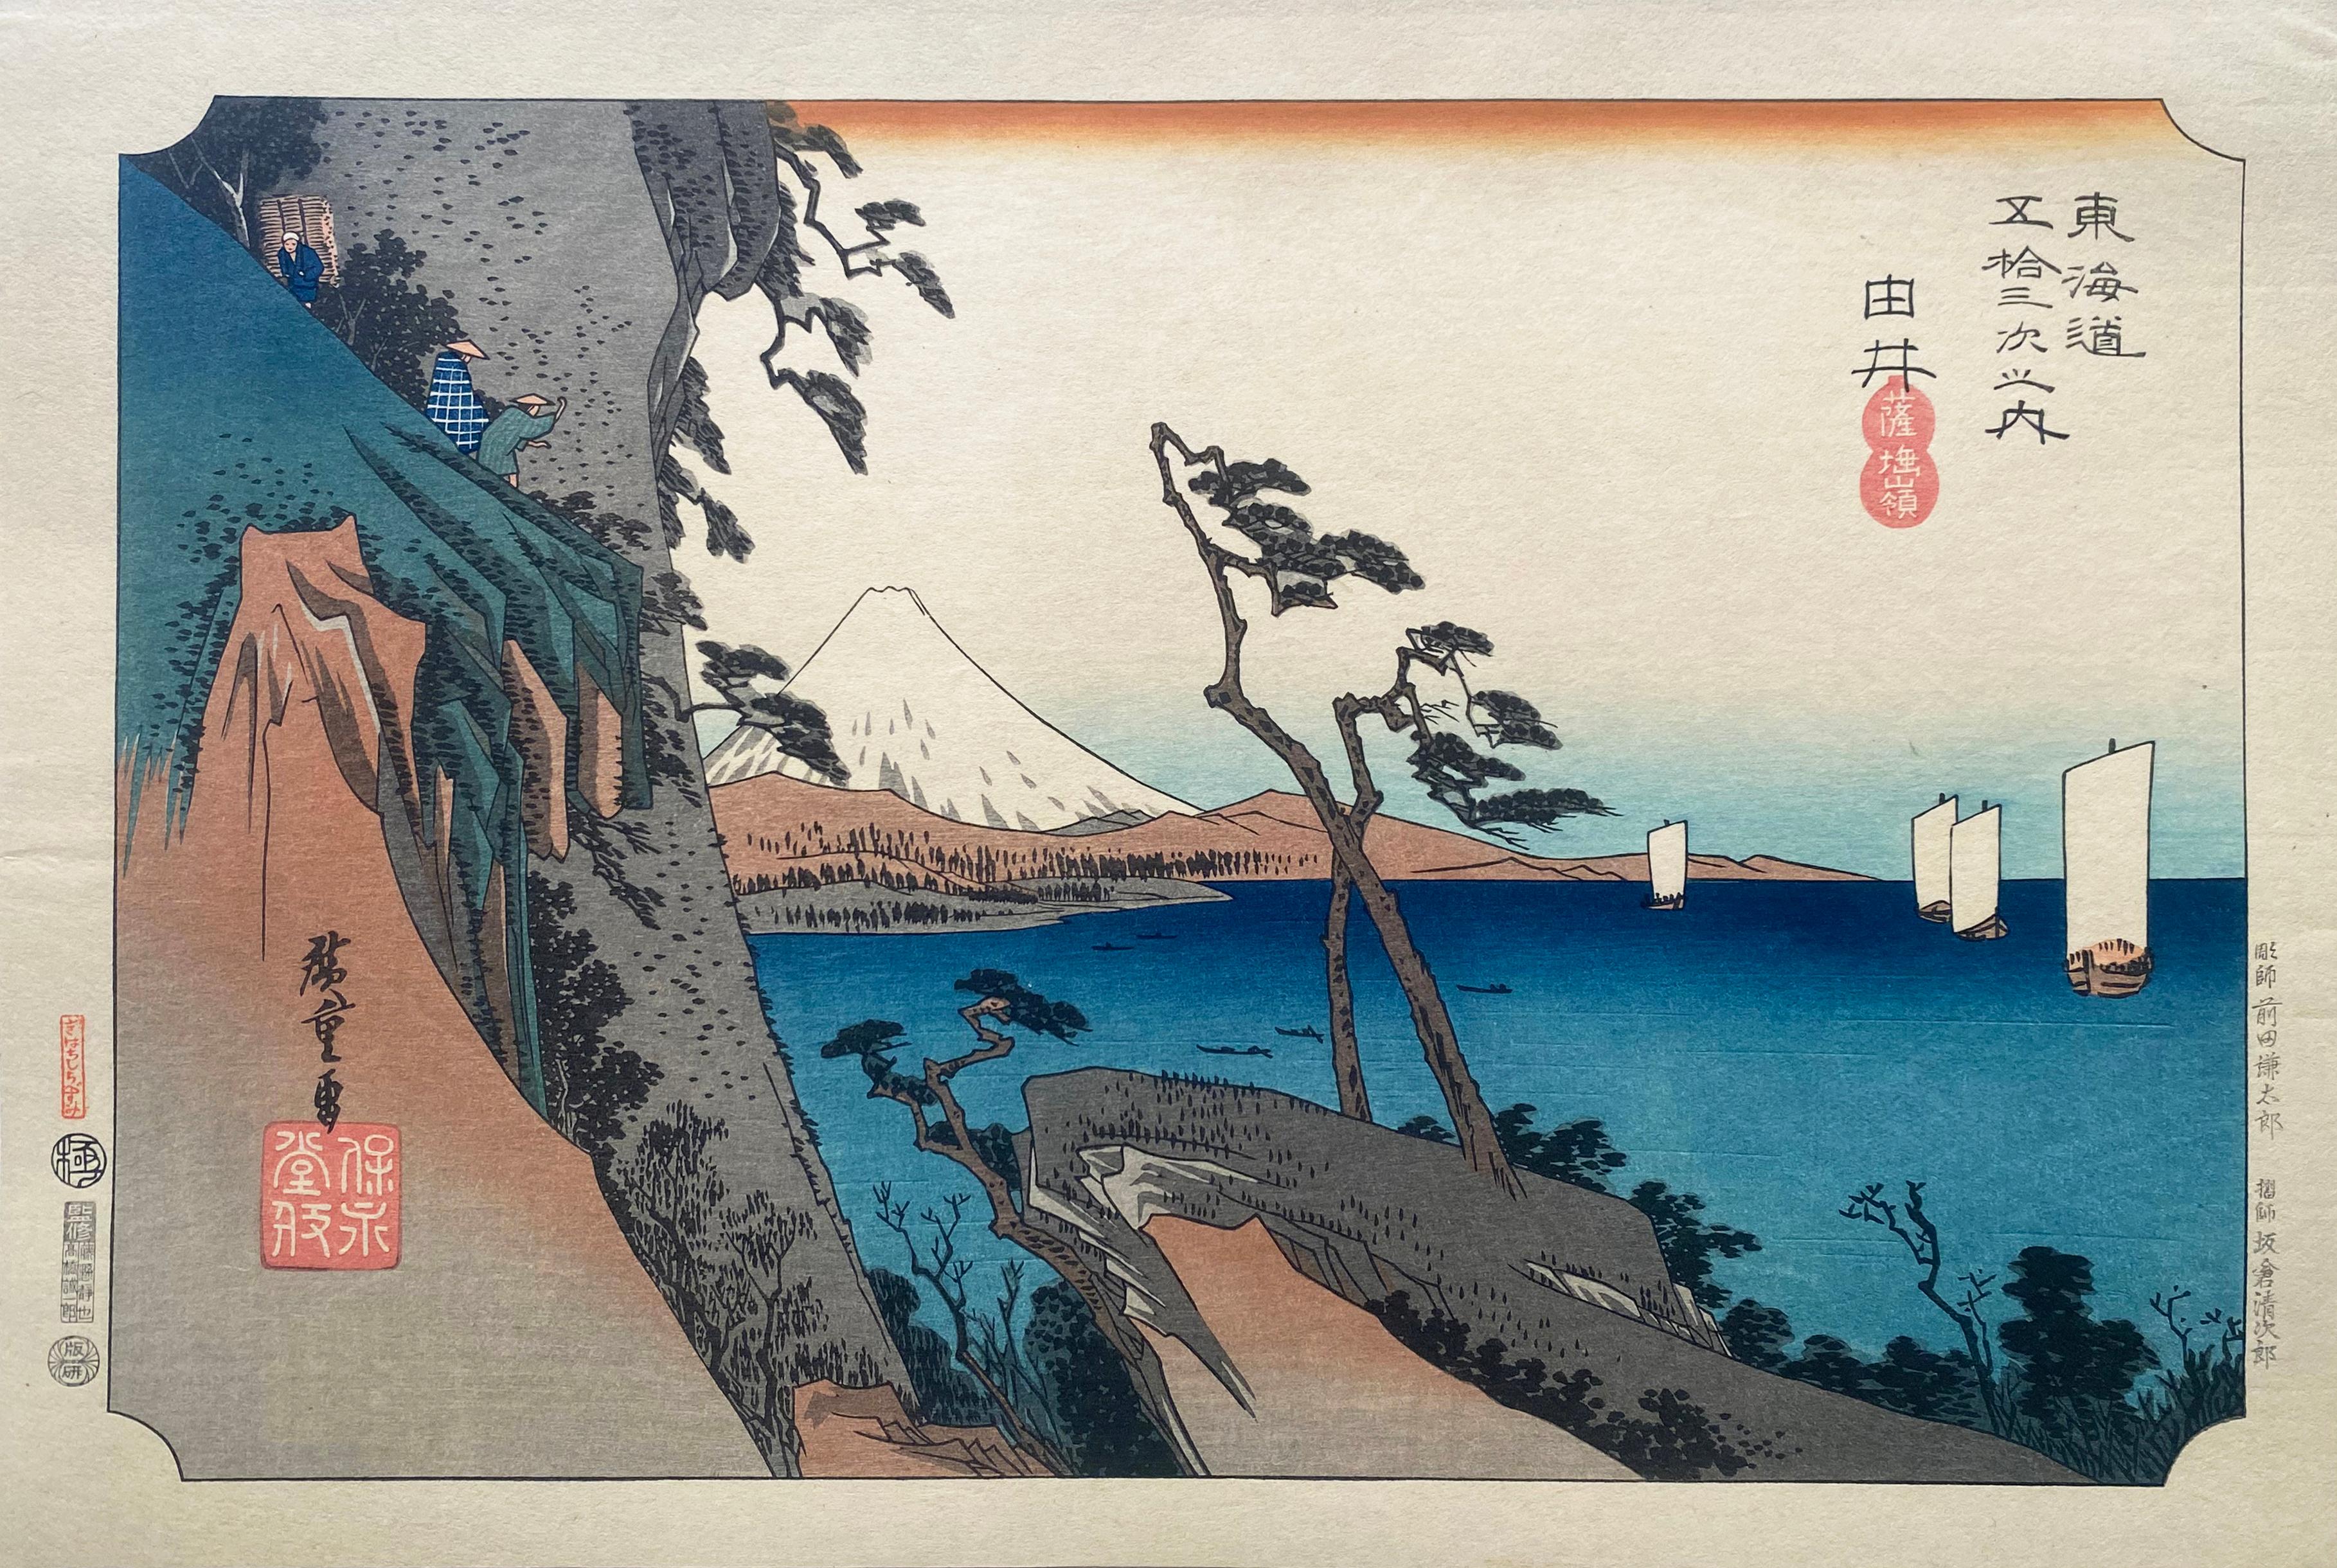 Utagawa Hiroshige (Ando Hiroshige) Landscape Print - 'View from Satta Peak', After Utagawa Hiroshige 歌川廣重, Ukiyo-e Woodblock, Tokaido